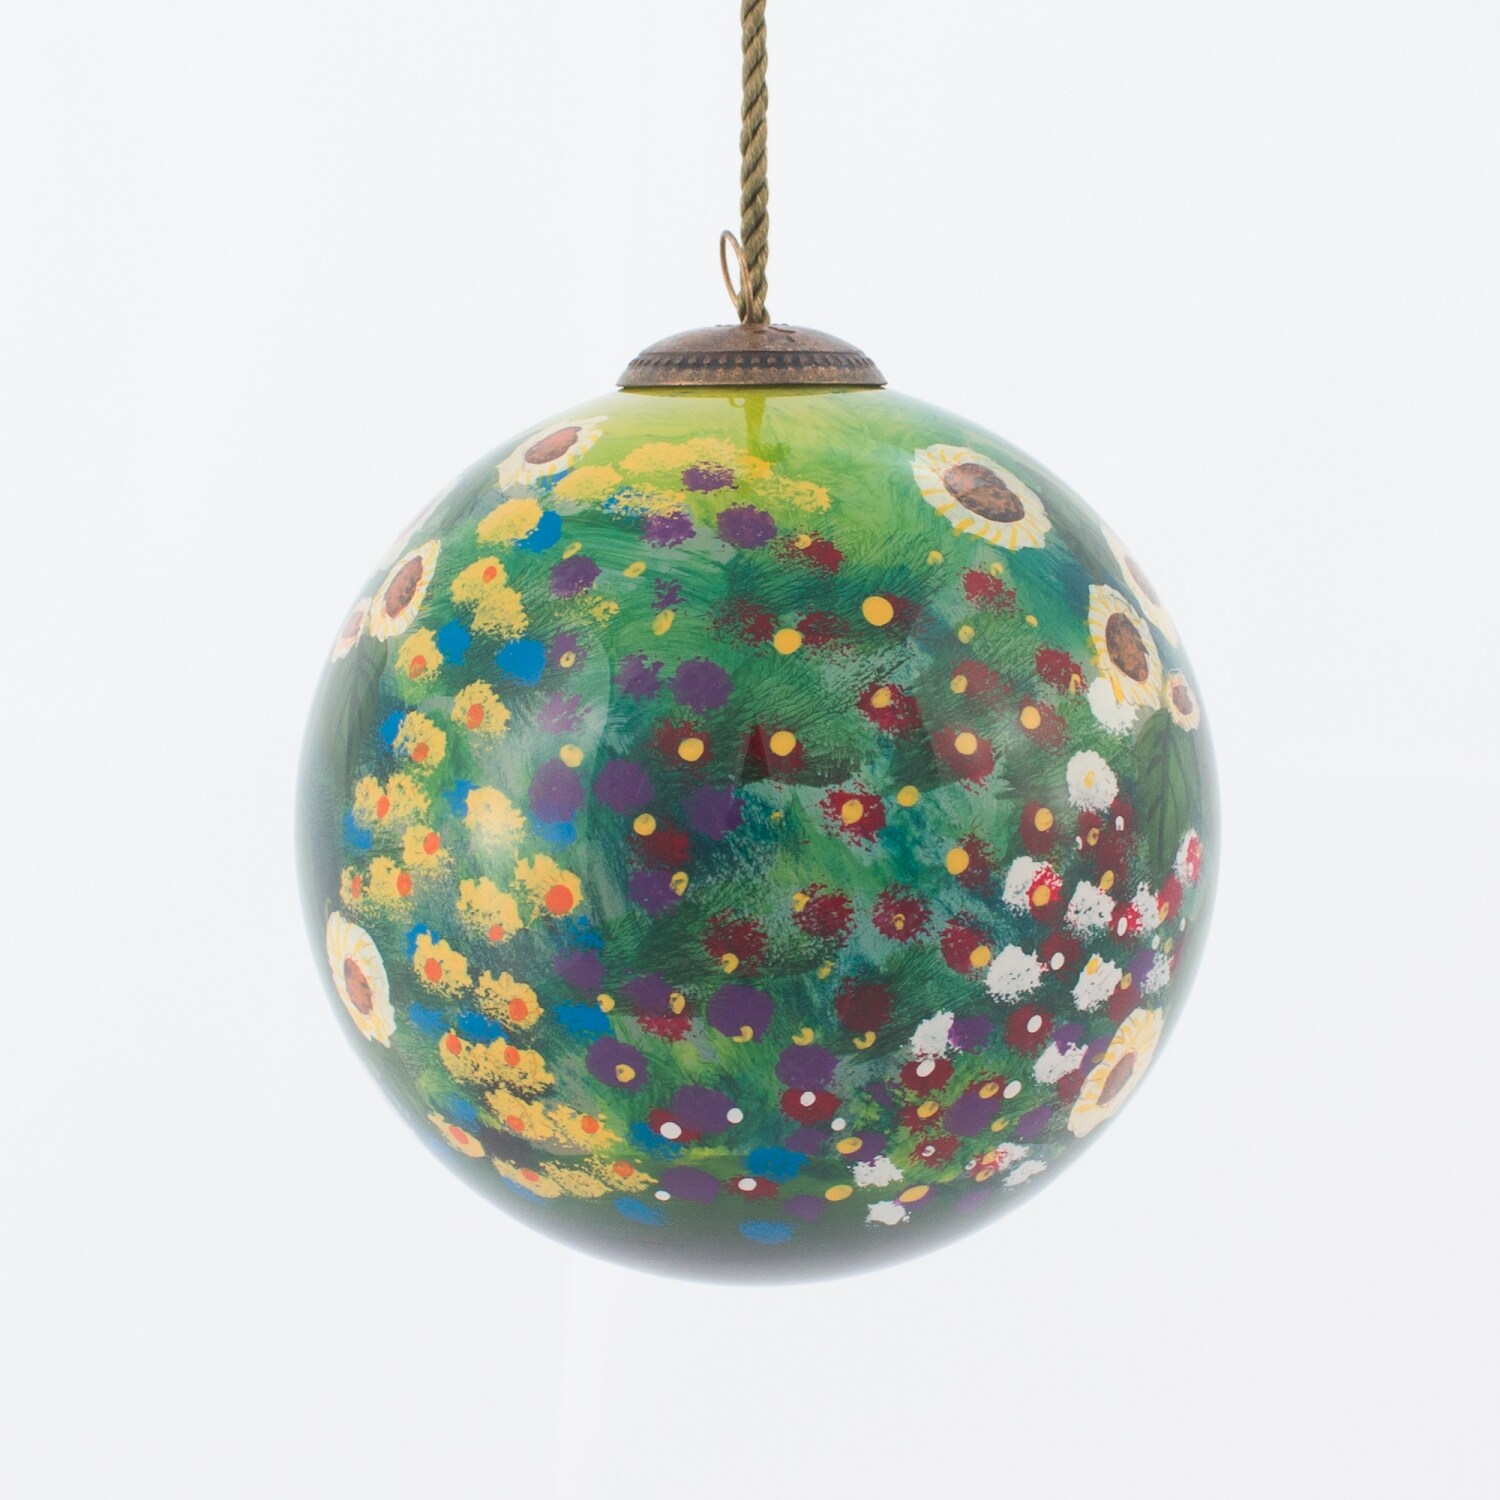 Kurt S. Adler Peacock Colors Glass Ball Ornaments Set of 6 - Digs